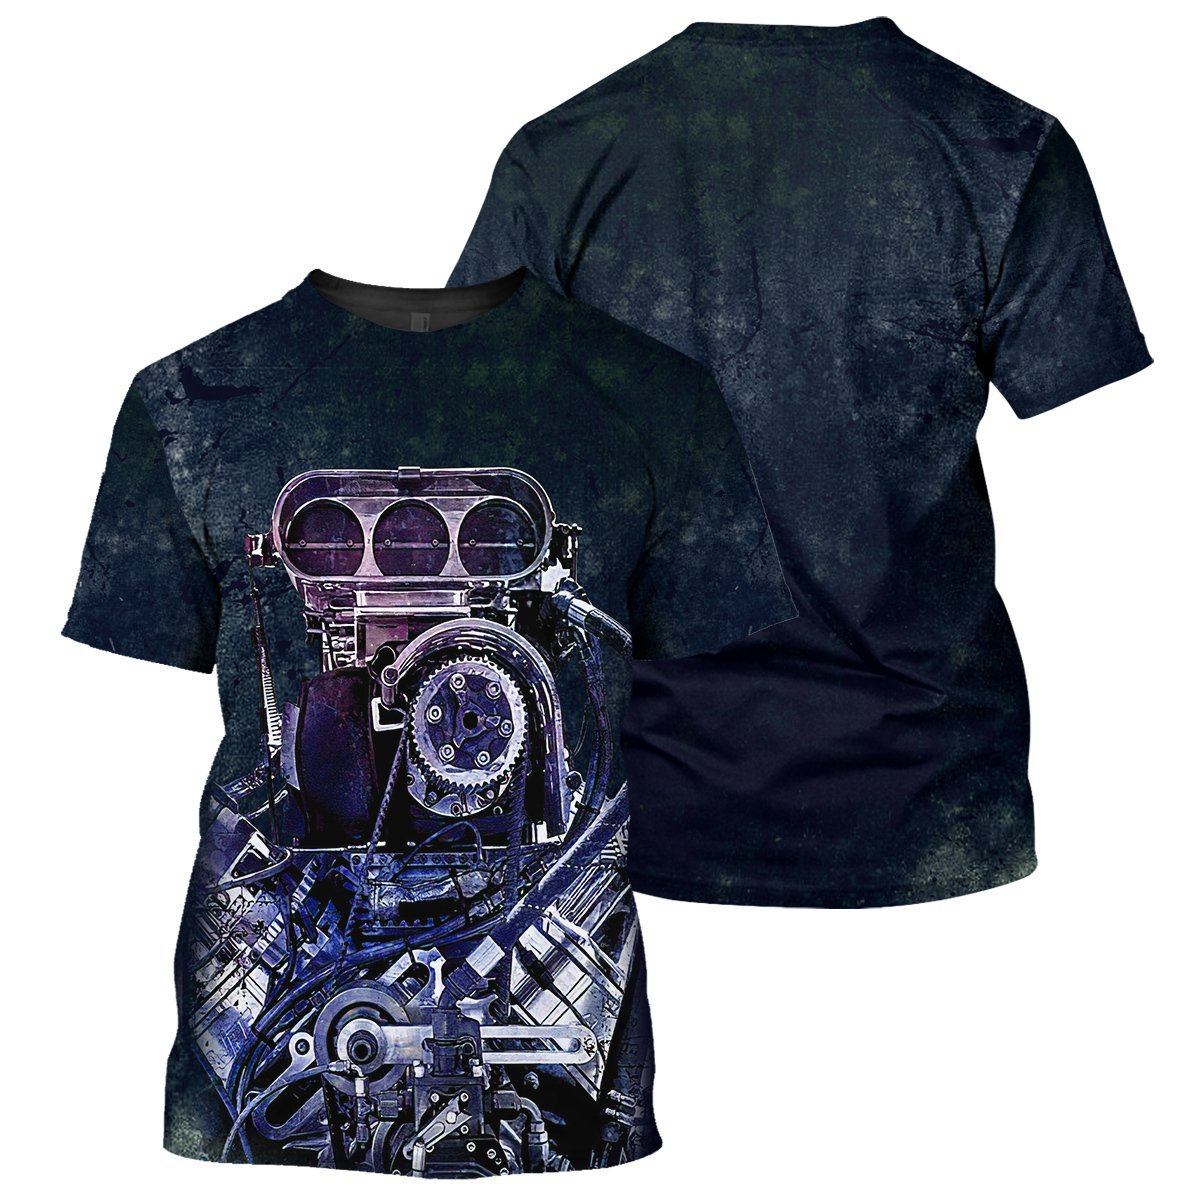 Gearhumans Navy Drag Racing- 3D All Over Printed Shirt shirt 3D Apparel T-SHIRT S 